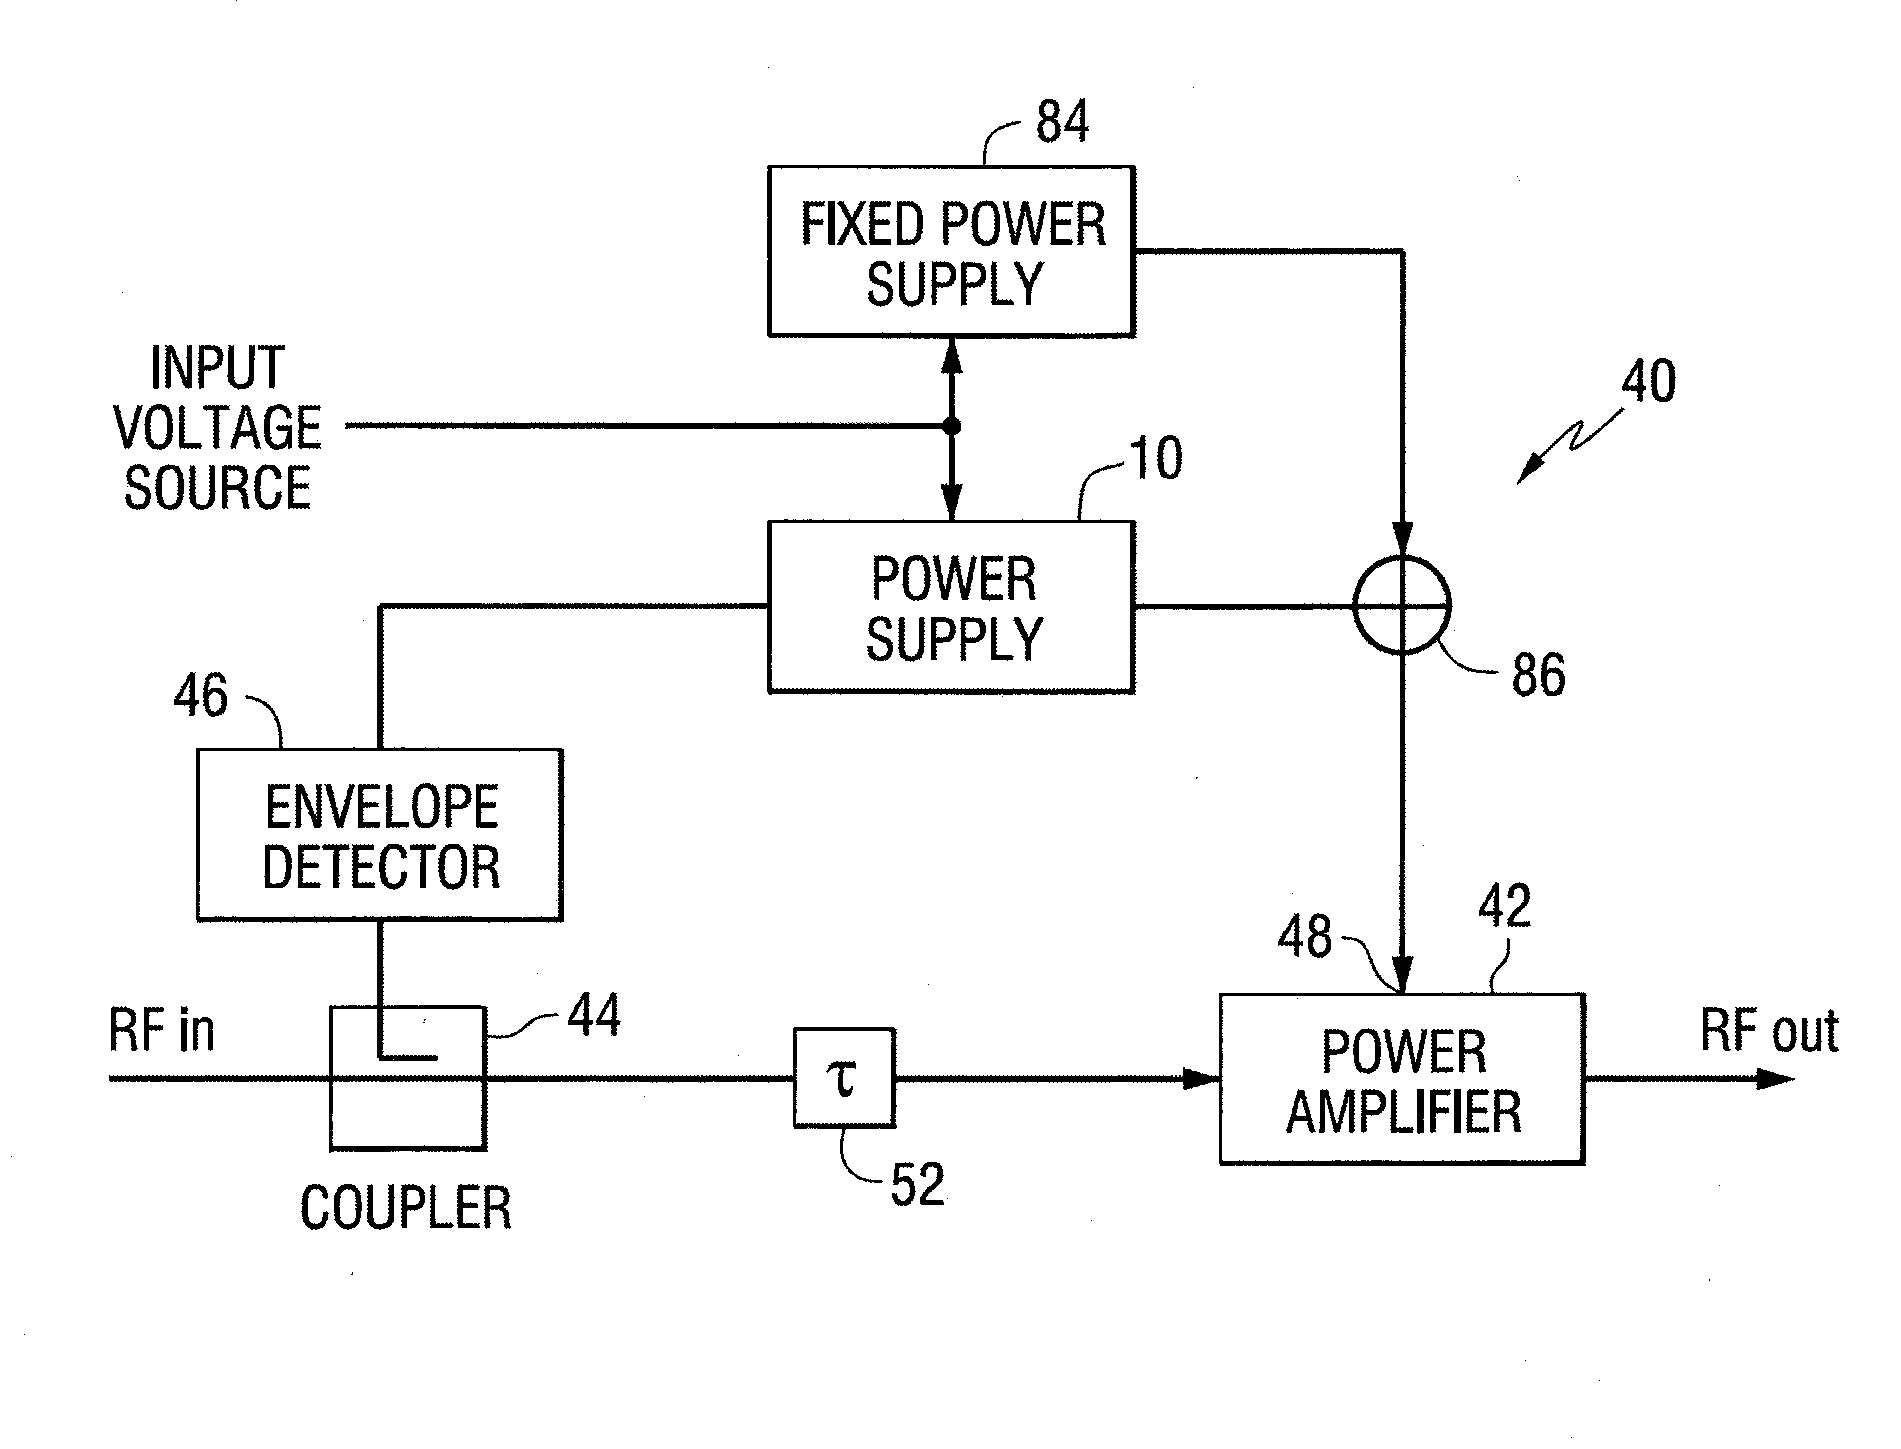 Power supply providing ultrafast modulation of output voltage